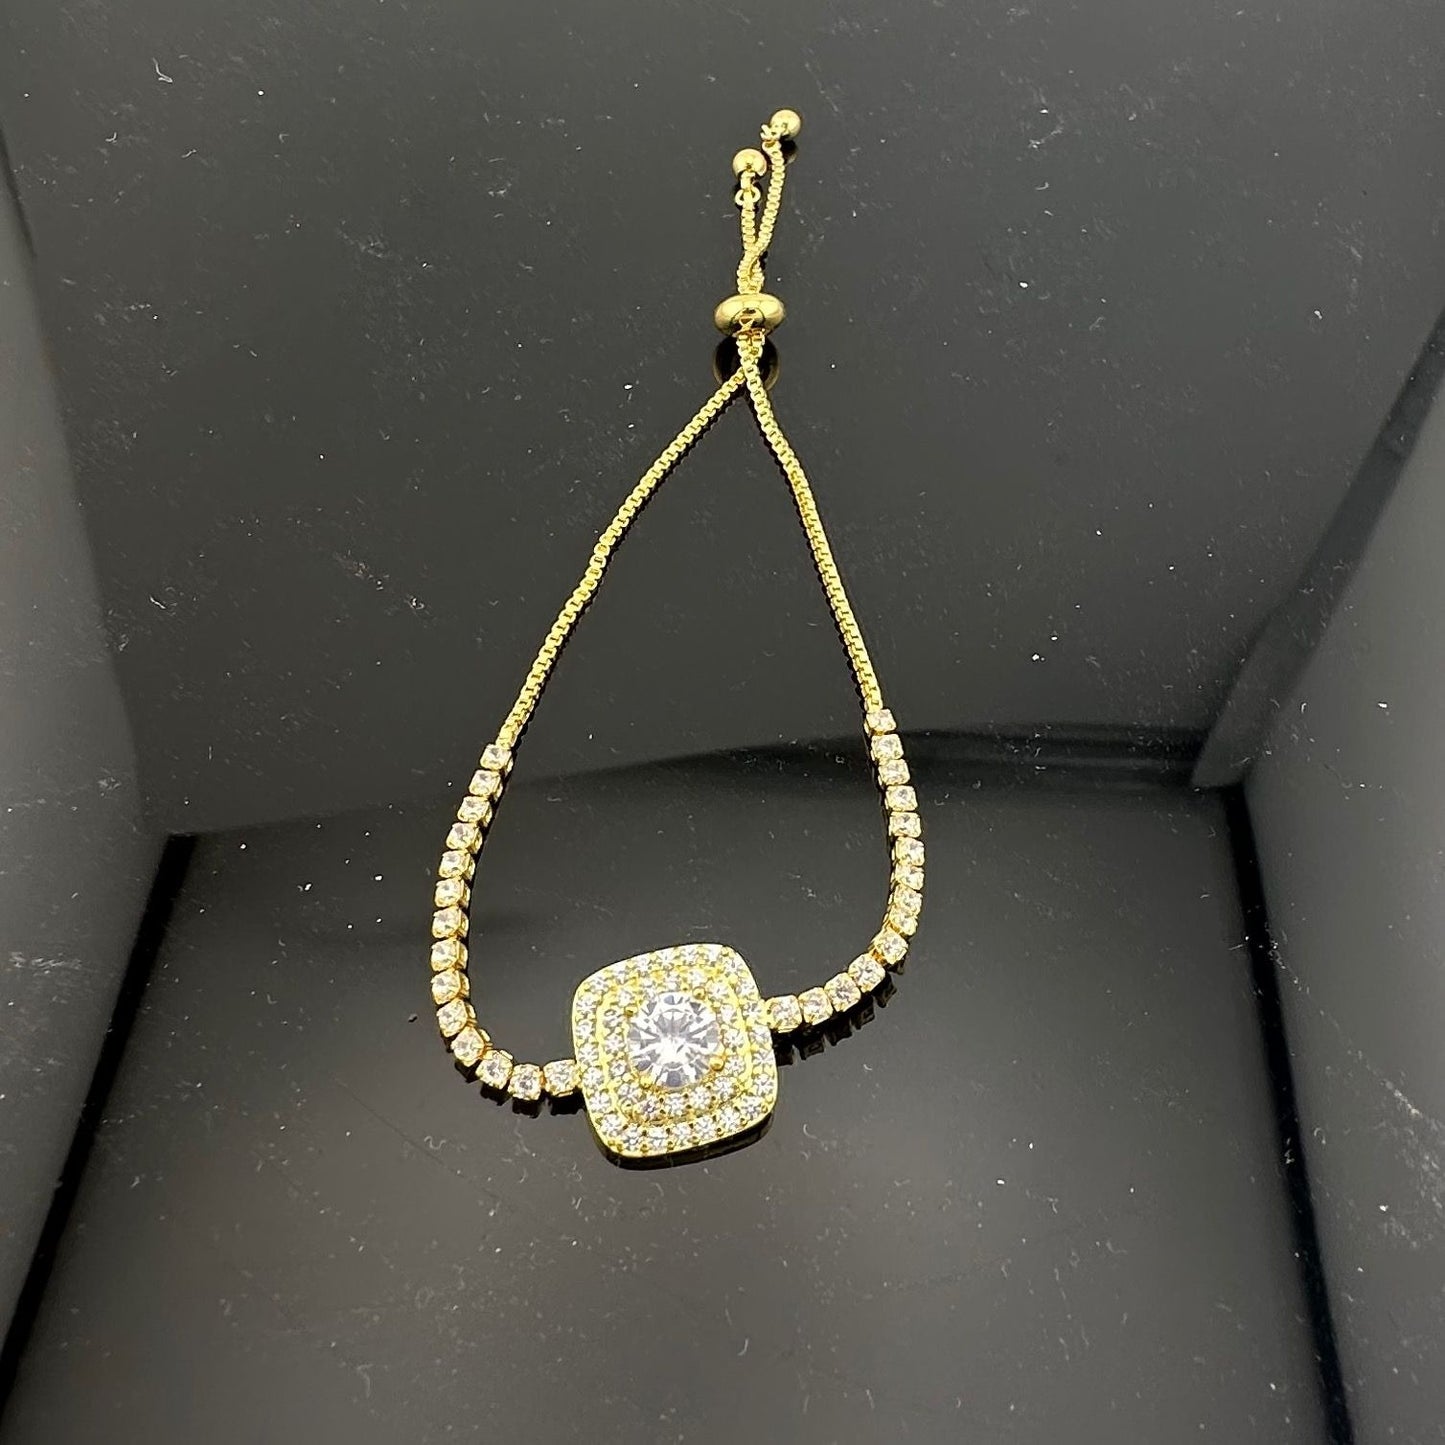 14kt Gold Plated Bolo Bracelet with 4.5 Carat White Topaz Gemstones